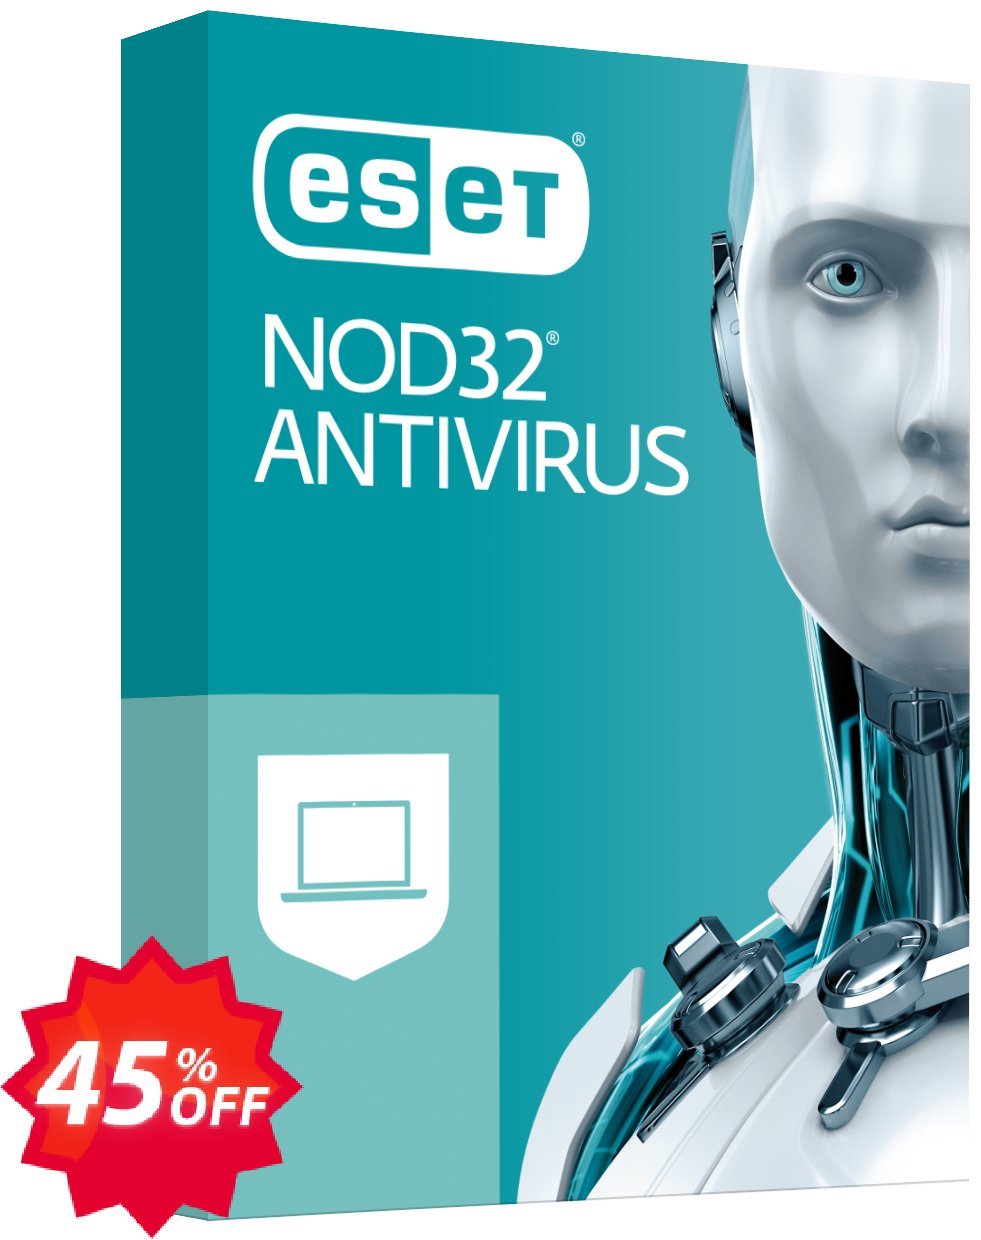 ESET NOD32 Antivirus - Renew 3 Years 1 Device Coupon code 45% discount 